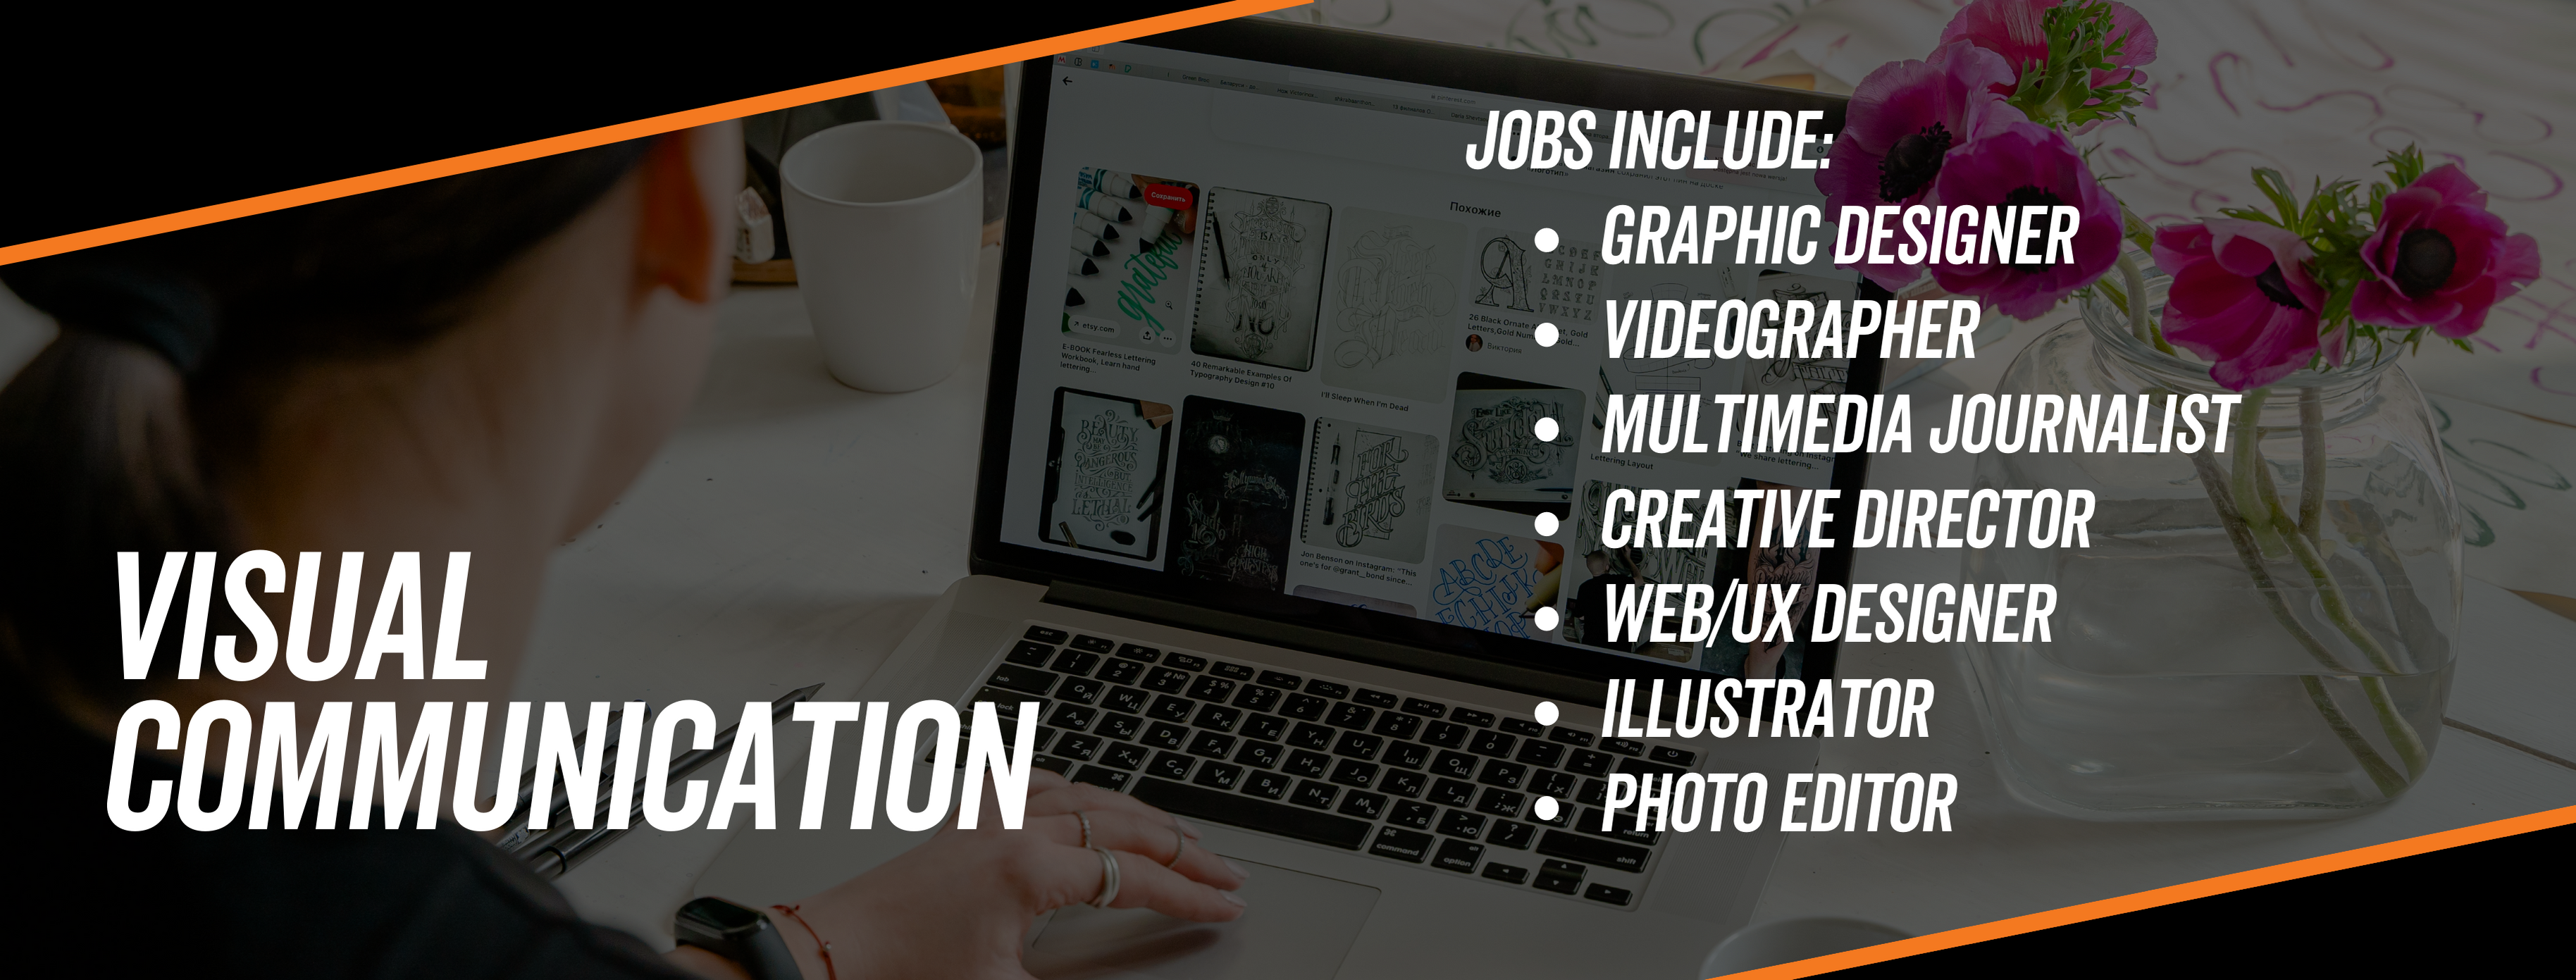 Visual communication jobs include graphic designer, videographer, multimedia journalist, creative director, web/UX designer, illustrator, photo editor